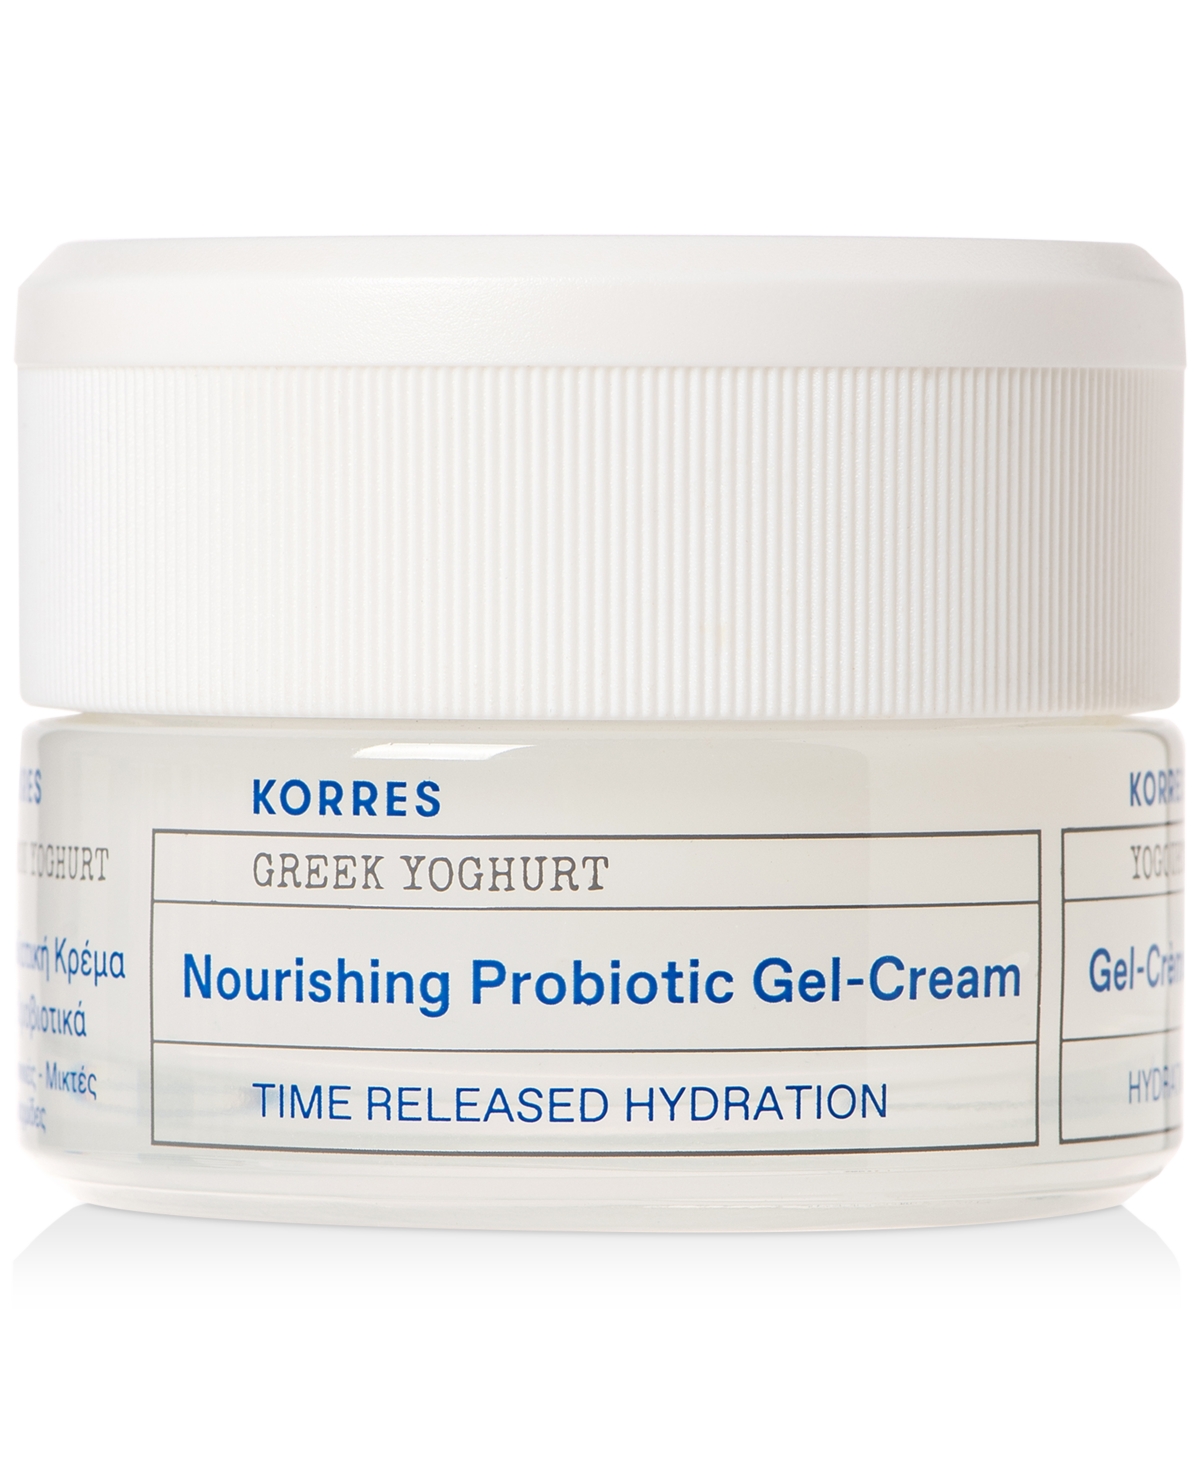 Greek Yoghurt Nourishing Probiotic Gel-Cream, 0.33 oz.